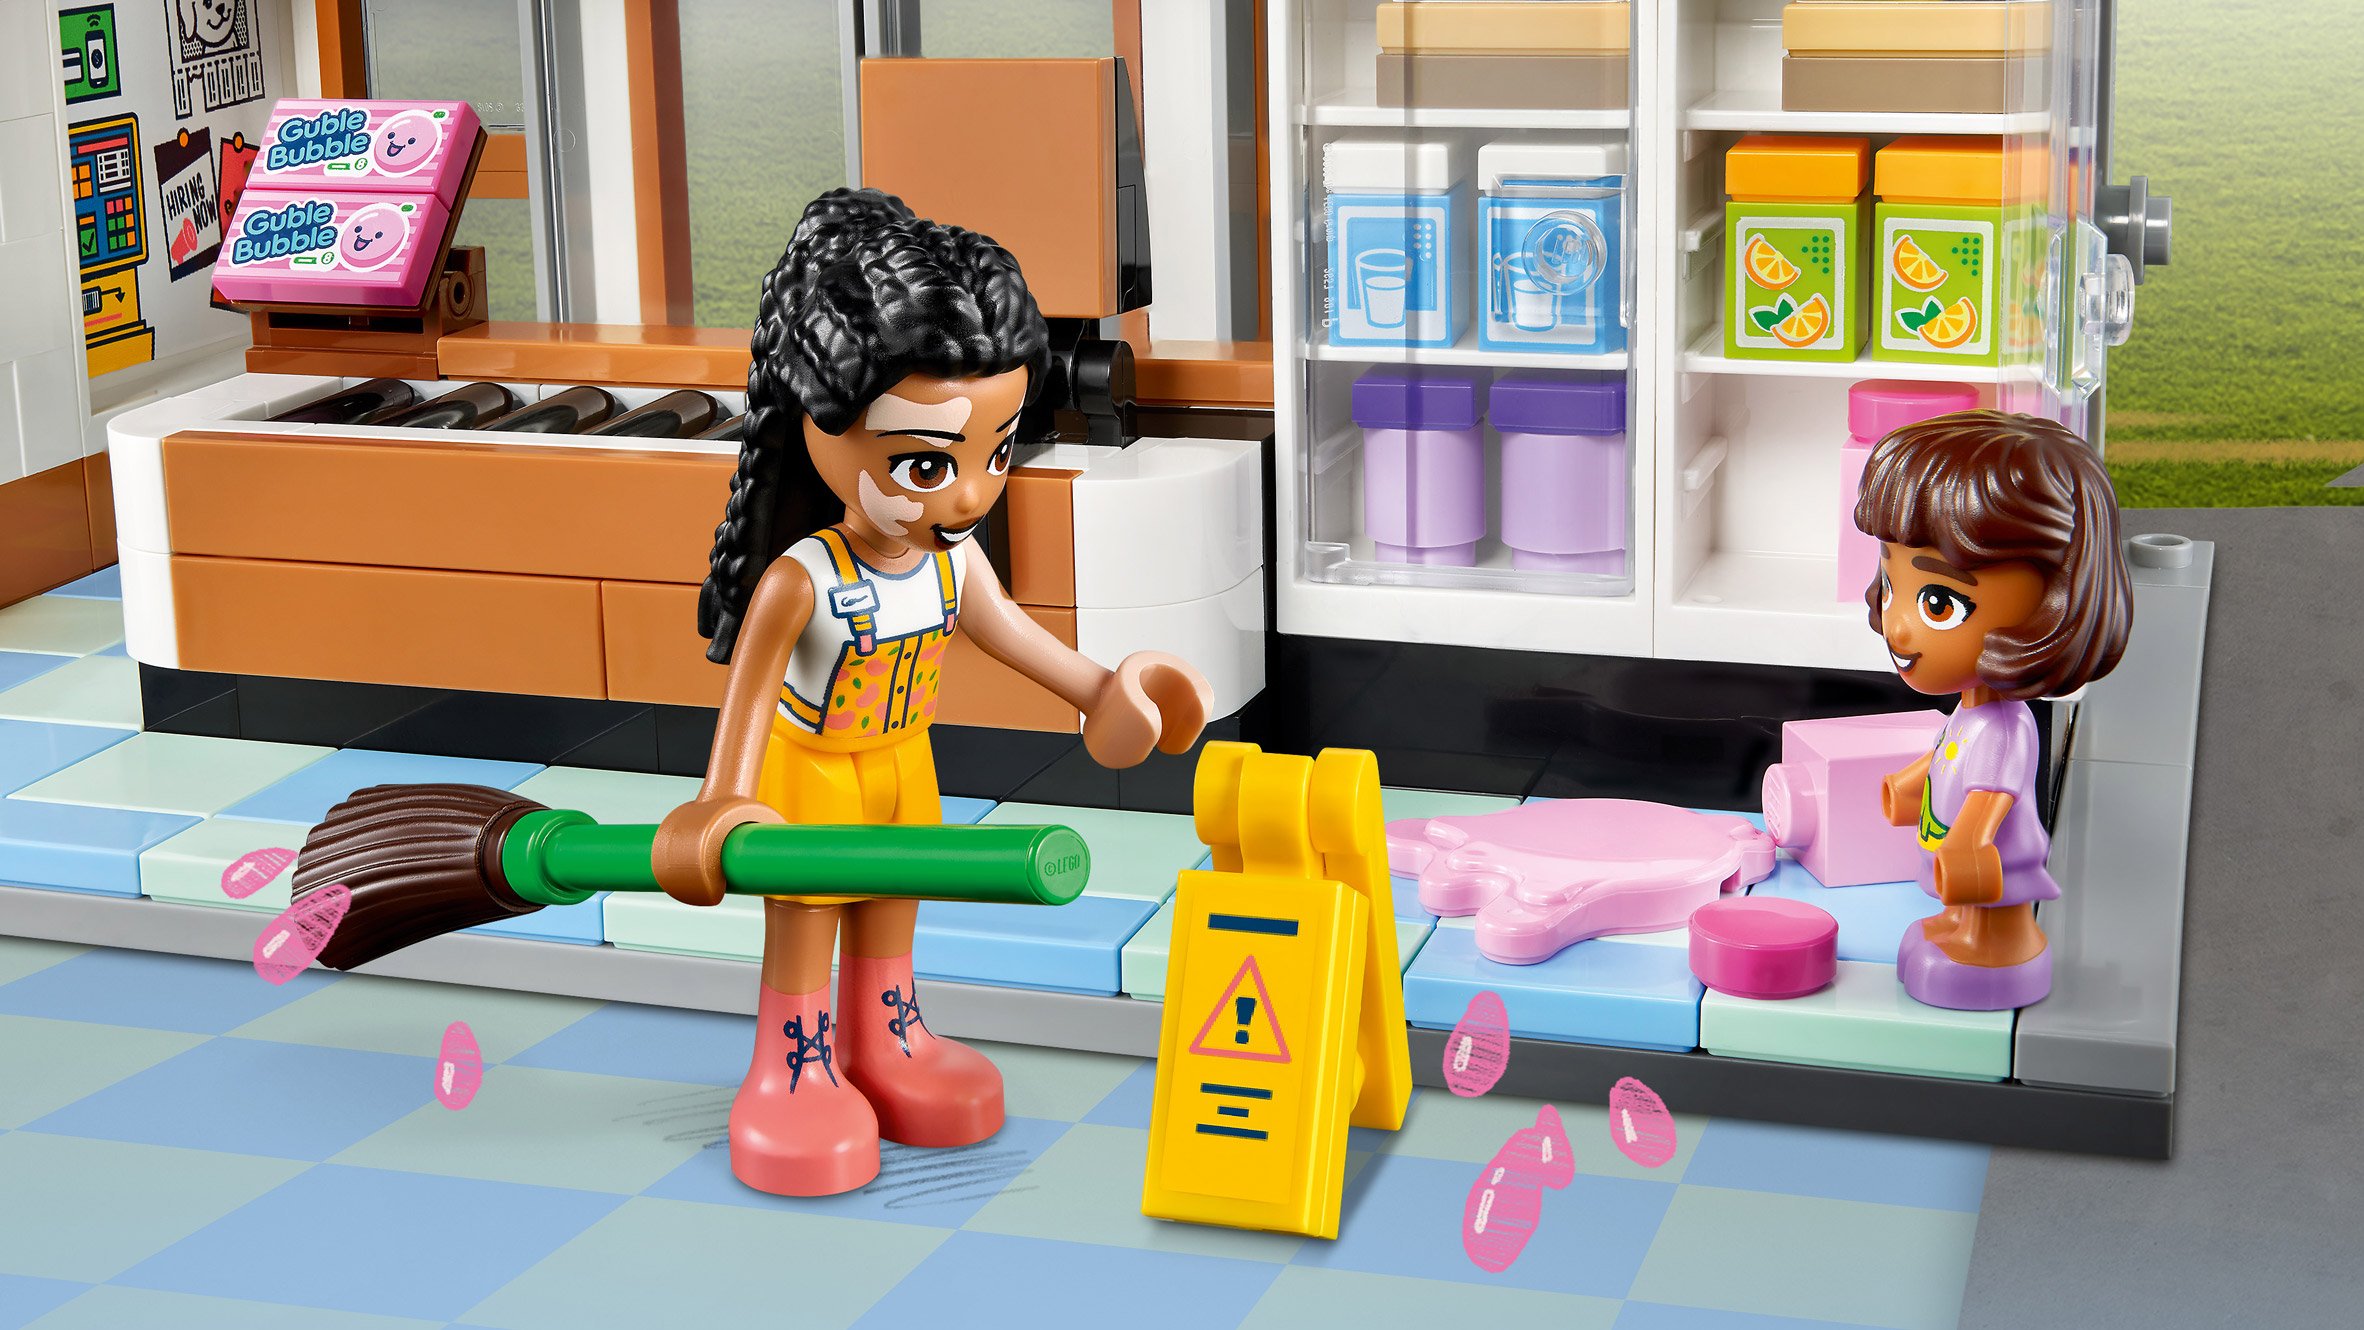 Lego unveils adorable 'Friends' Central Perk playset: Photos